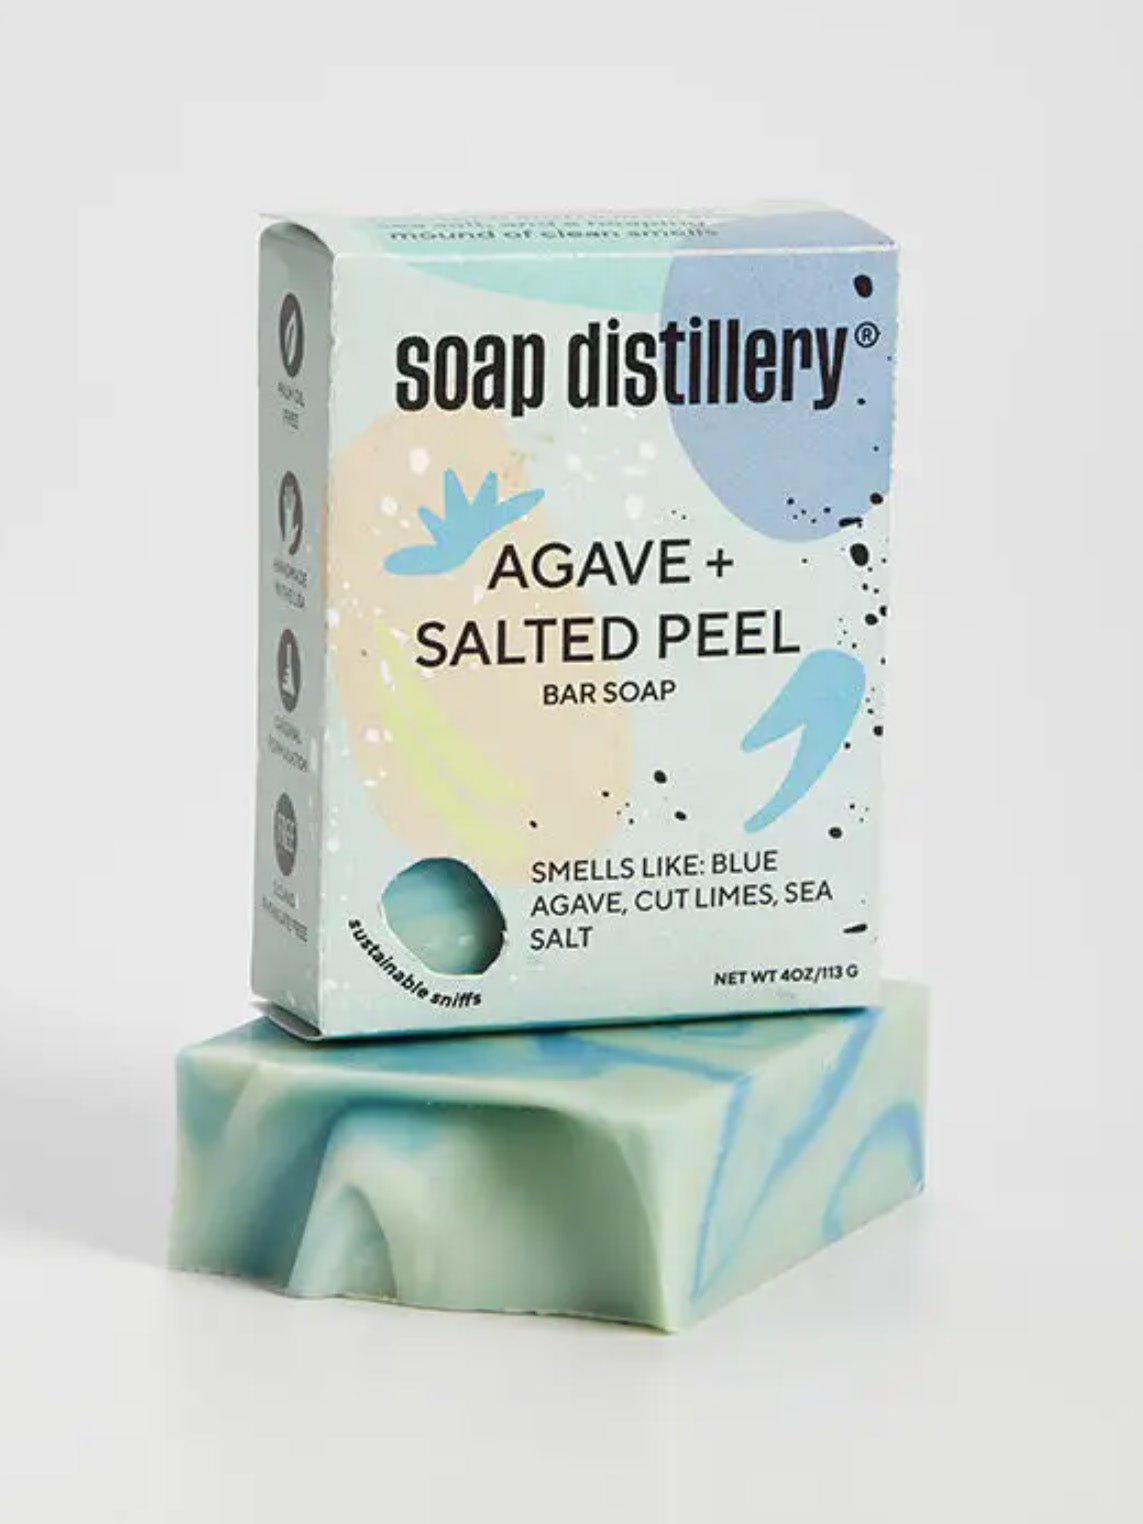 agave + salted peel bar soap